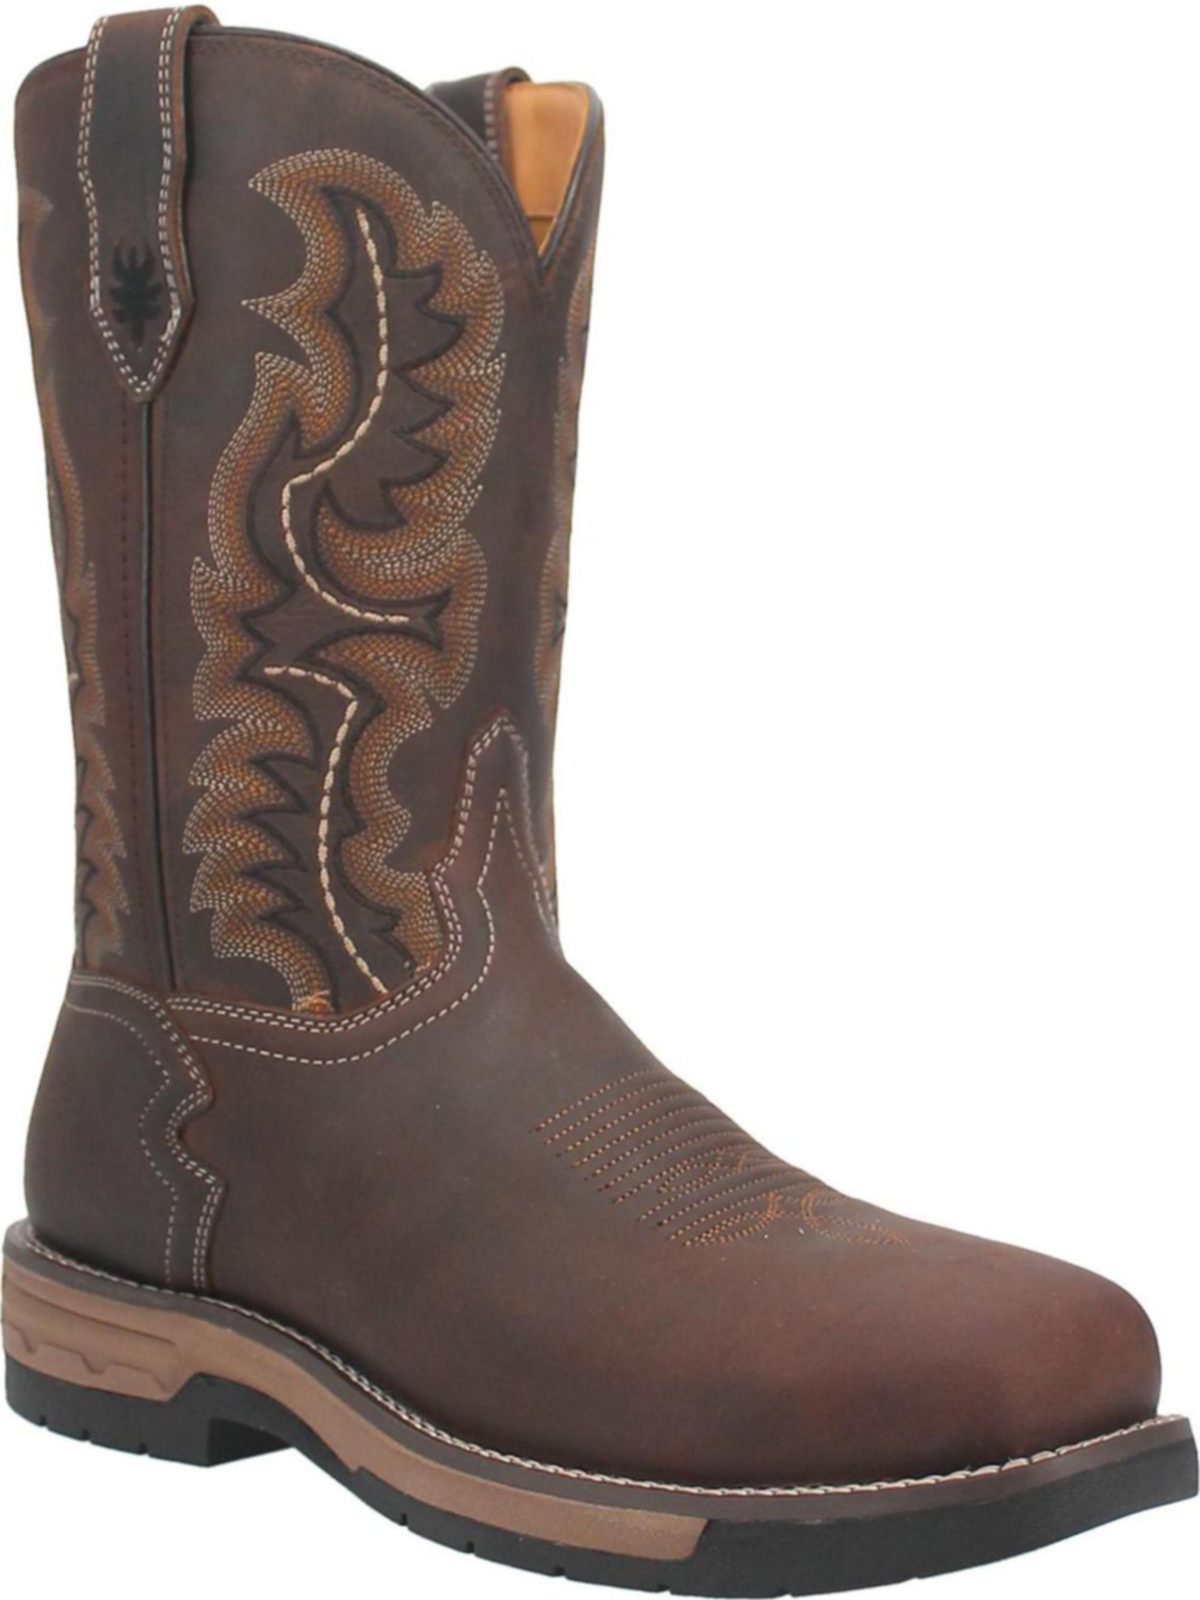 Shop Laredo Mens Stringfellow-Steel Toe Leather Boot Brown 6921 | Save ...